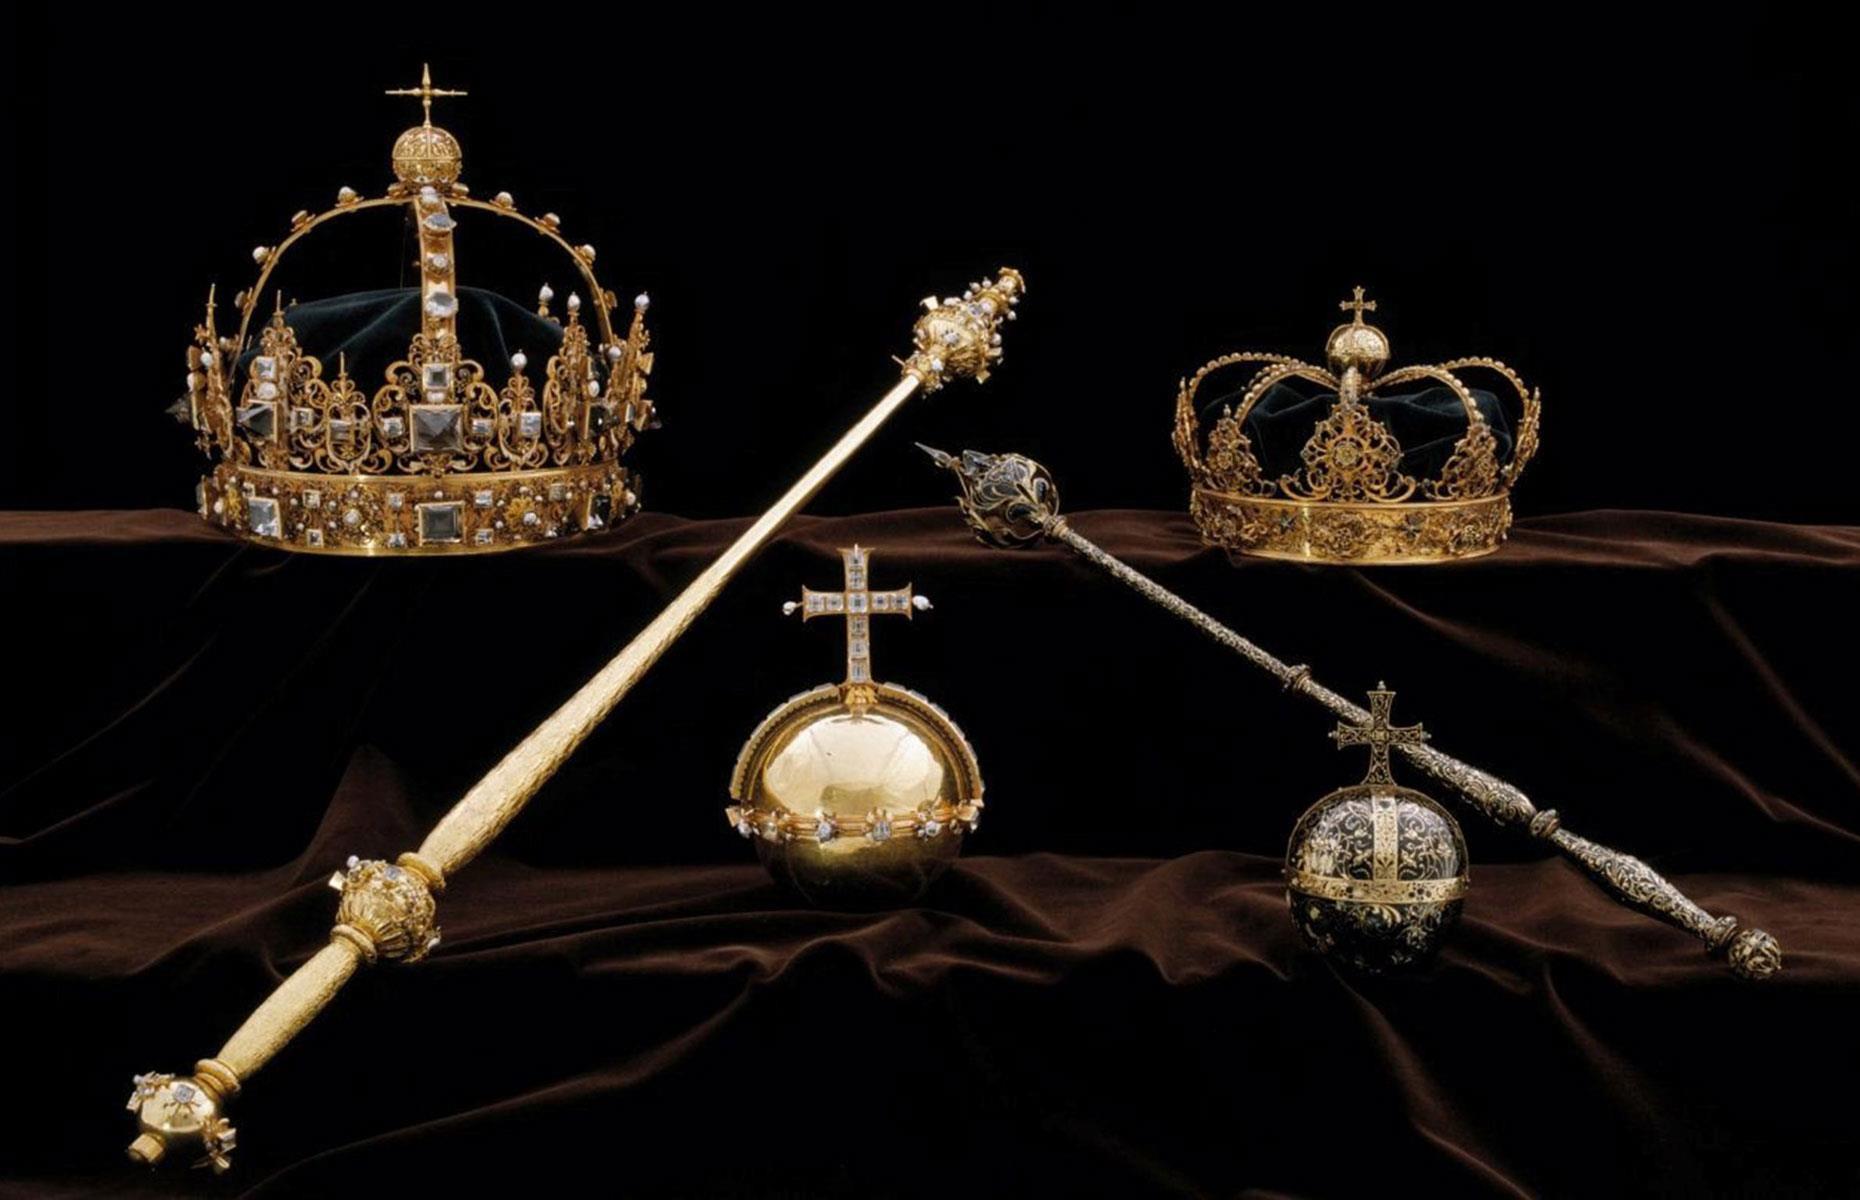 2019: The stolen Swedish Crown Jewels